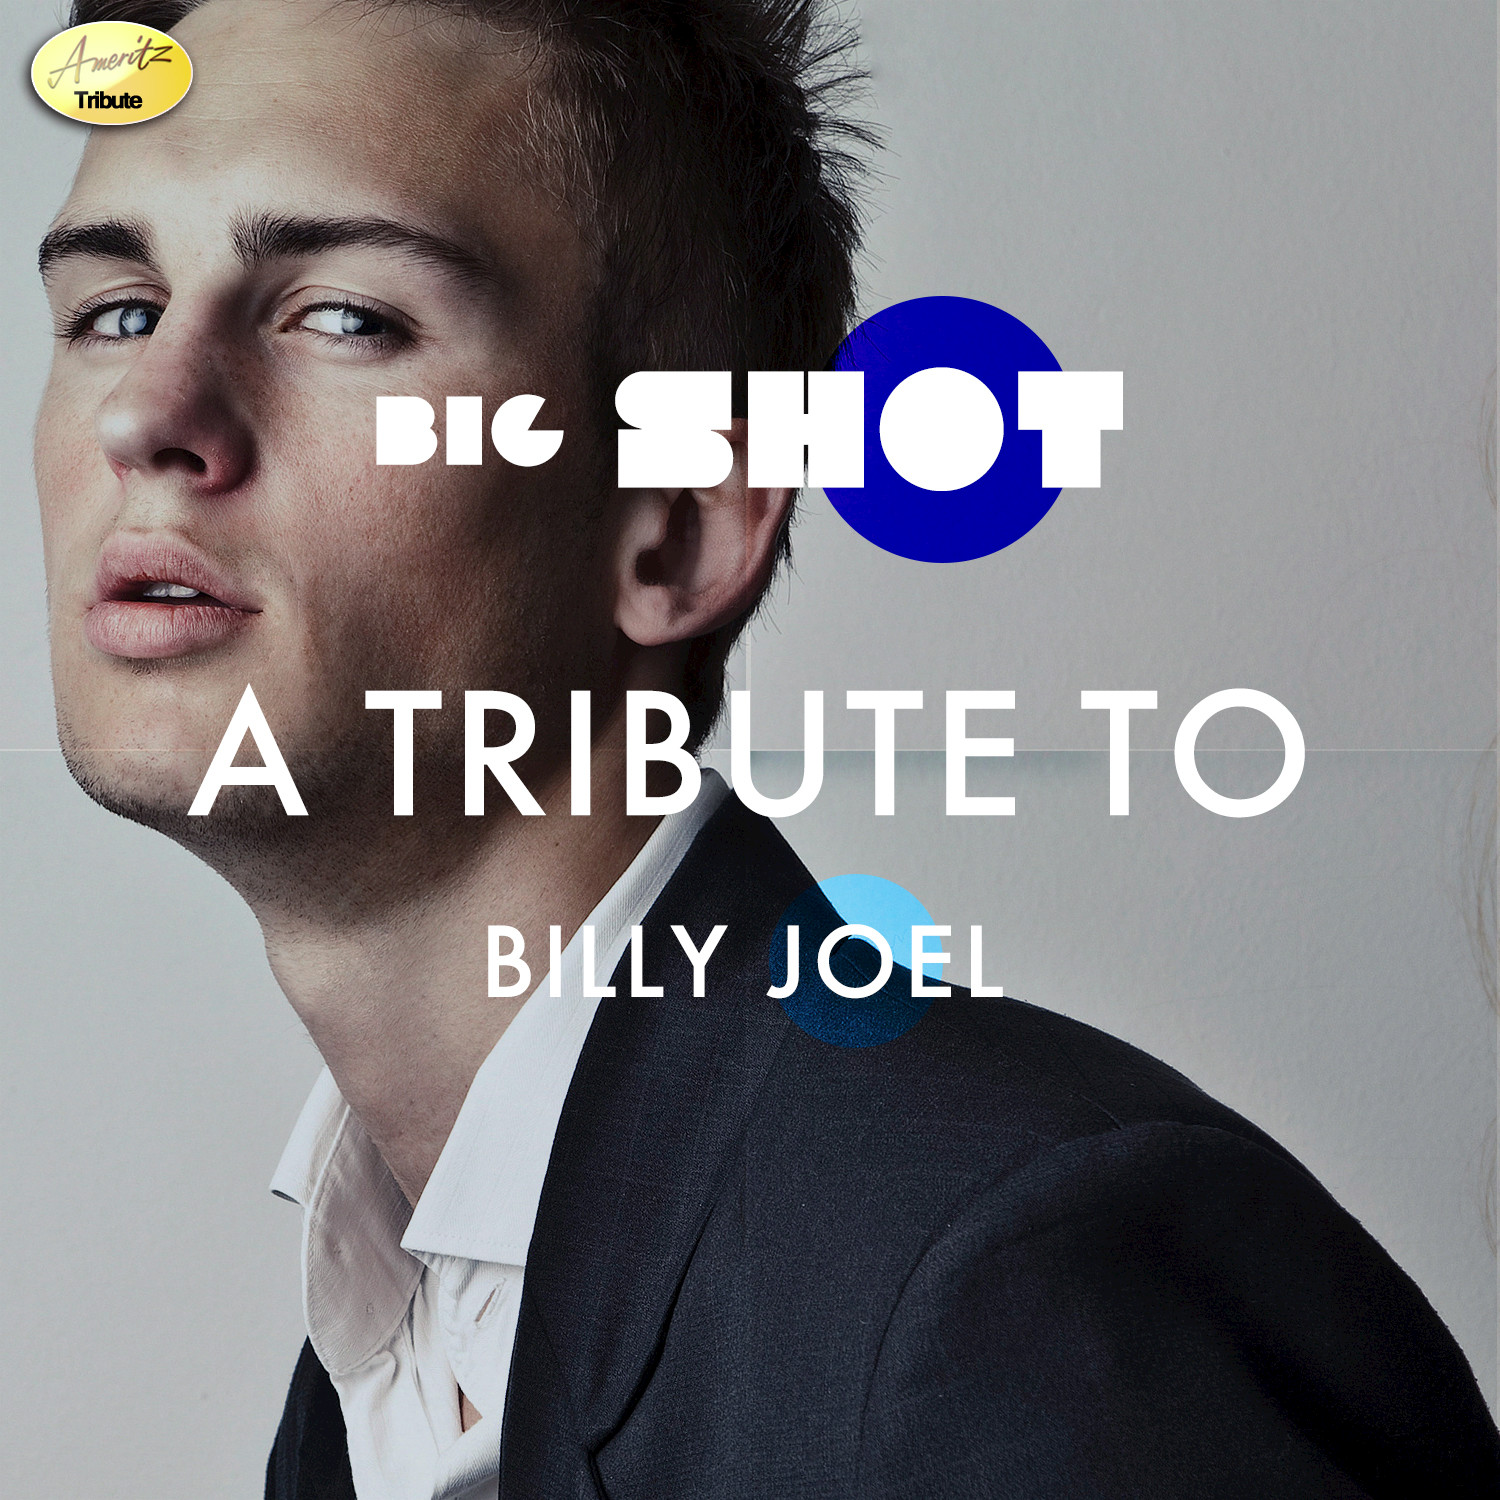 Big Shot: A Tribute to Billy Joel